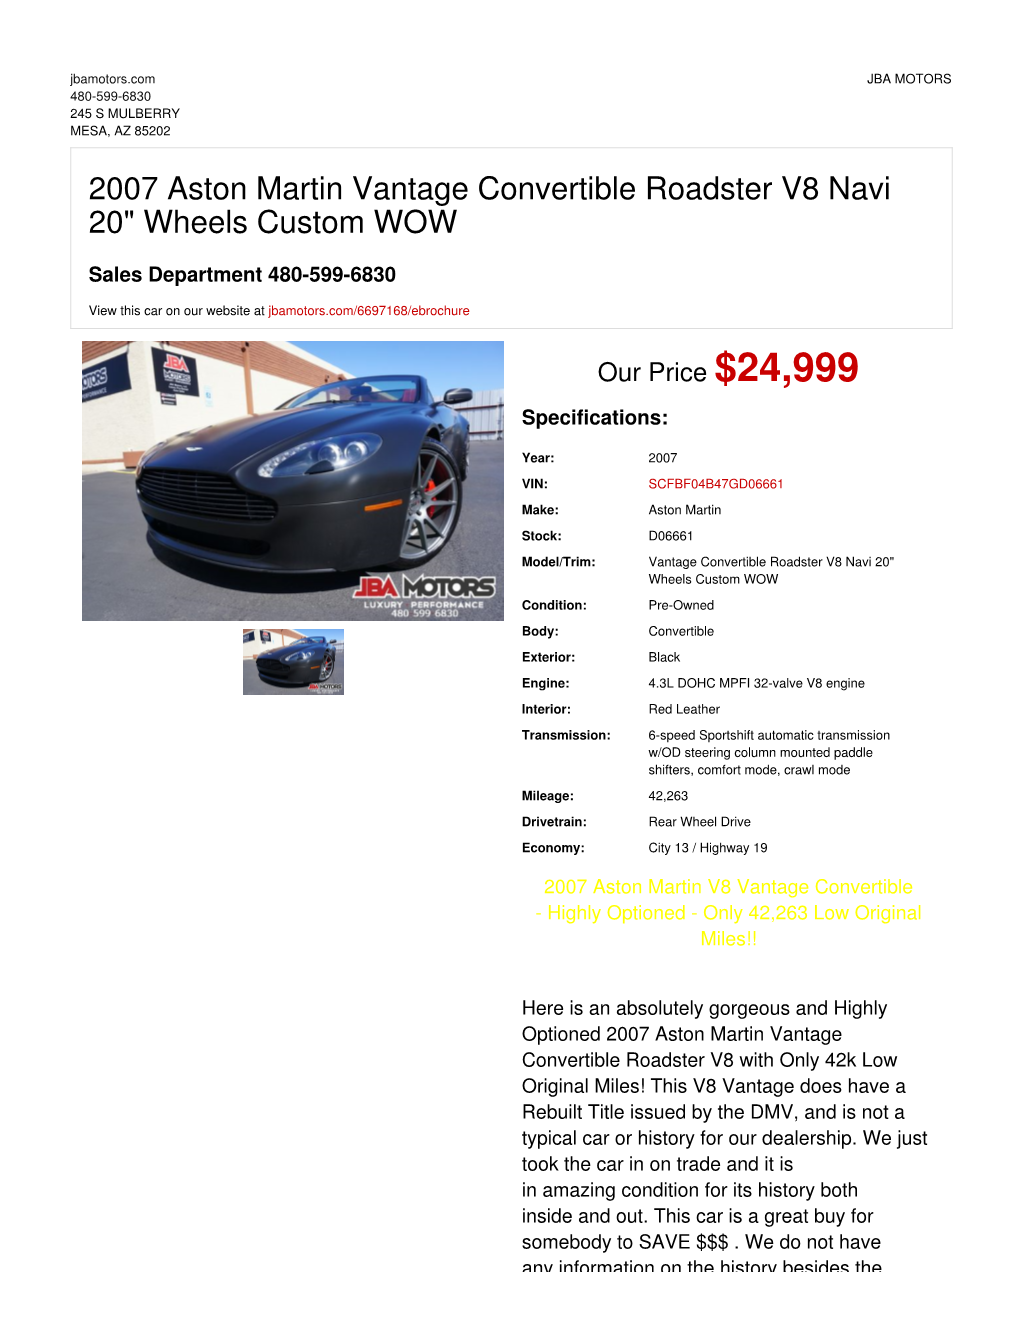 2007 Aston Martin Vantage Convertible Roadster V8 Navi 20" Wheels Custom WOW